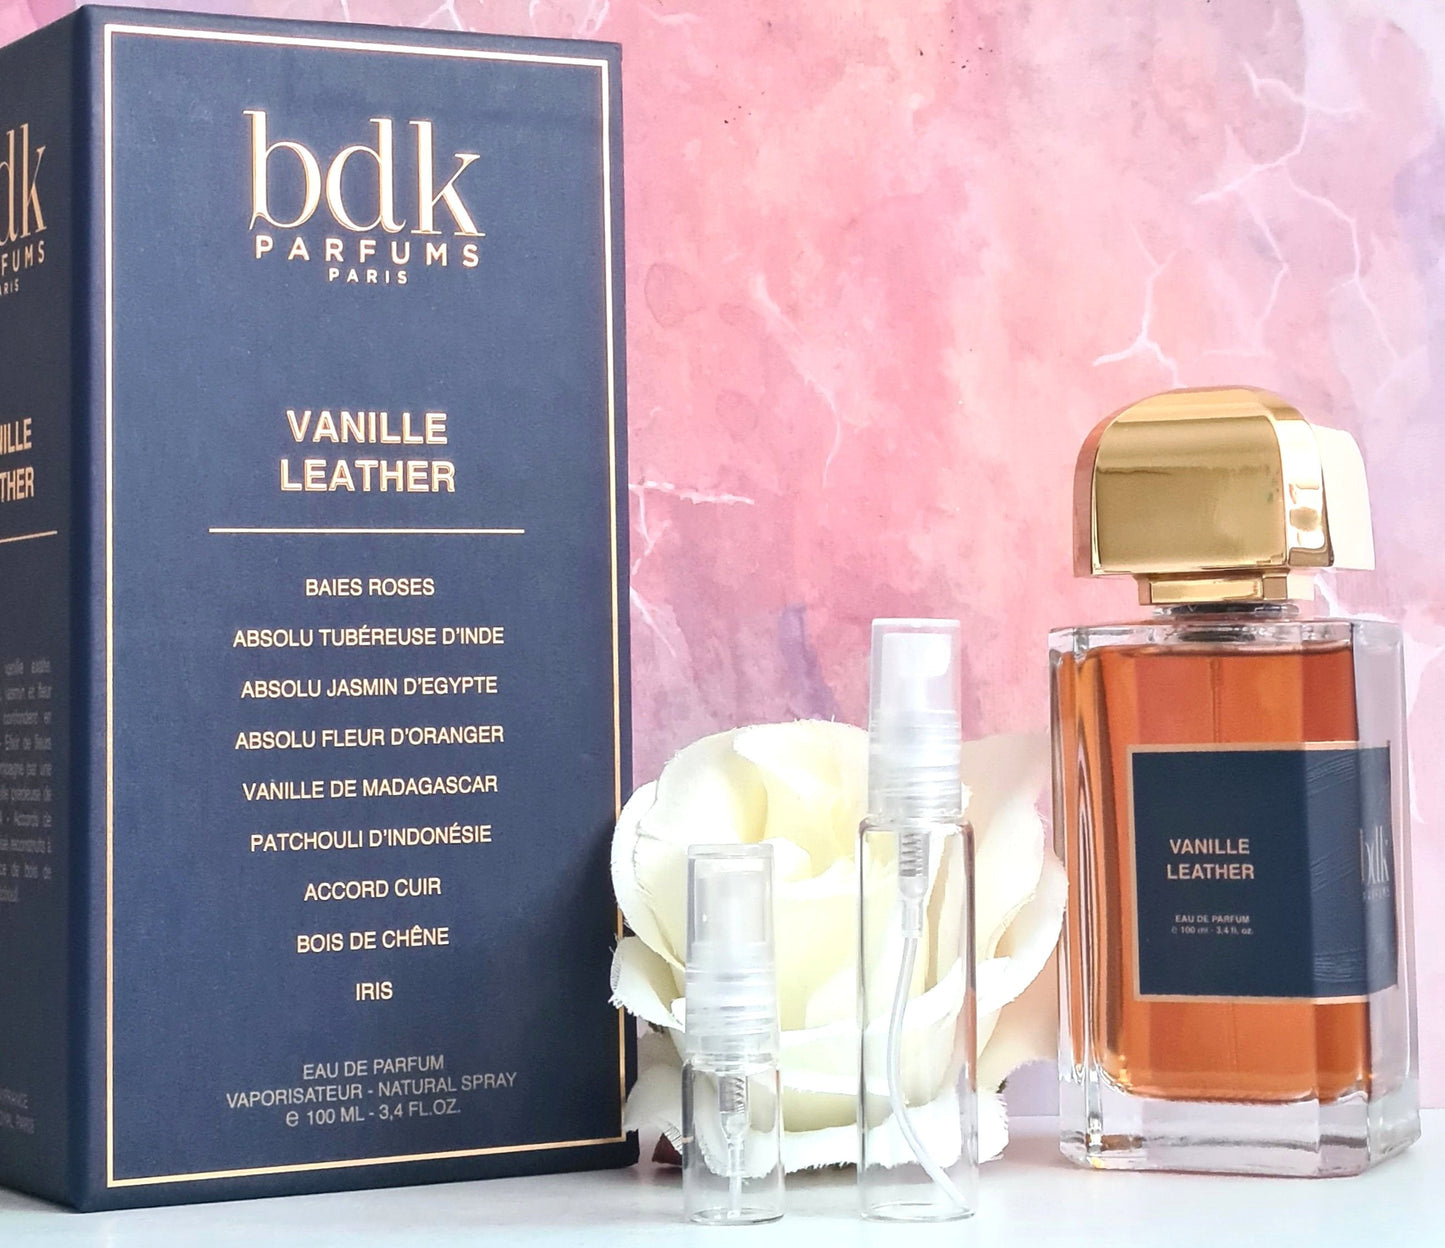 BDK Parfums Vanille Leather EDP samples. - Thewayfarerscents